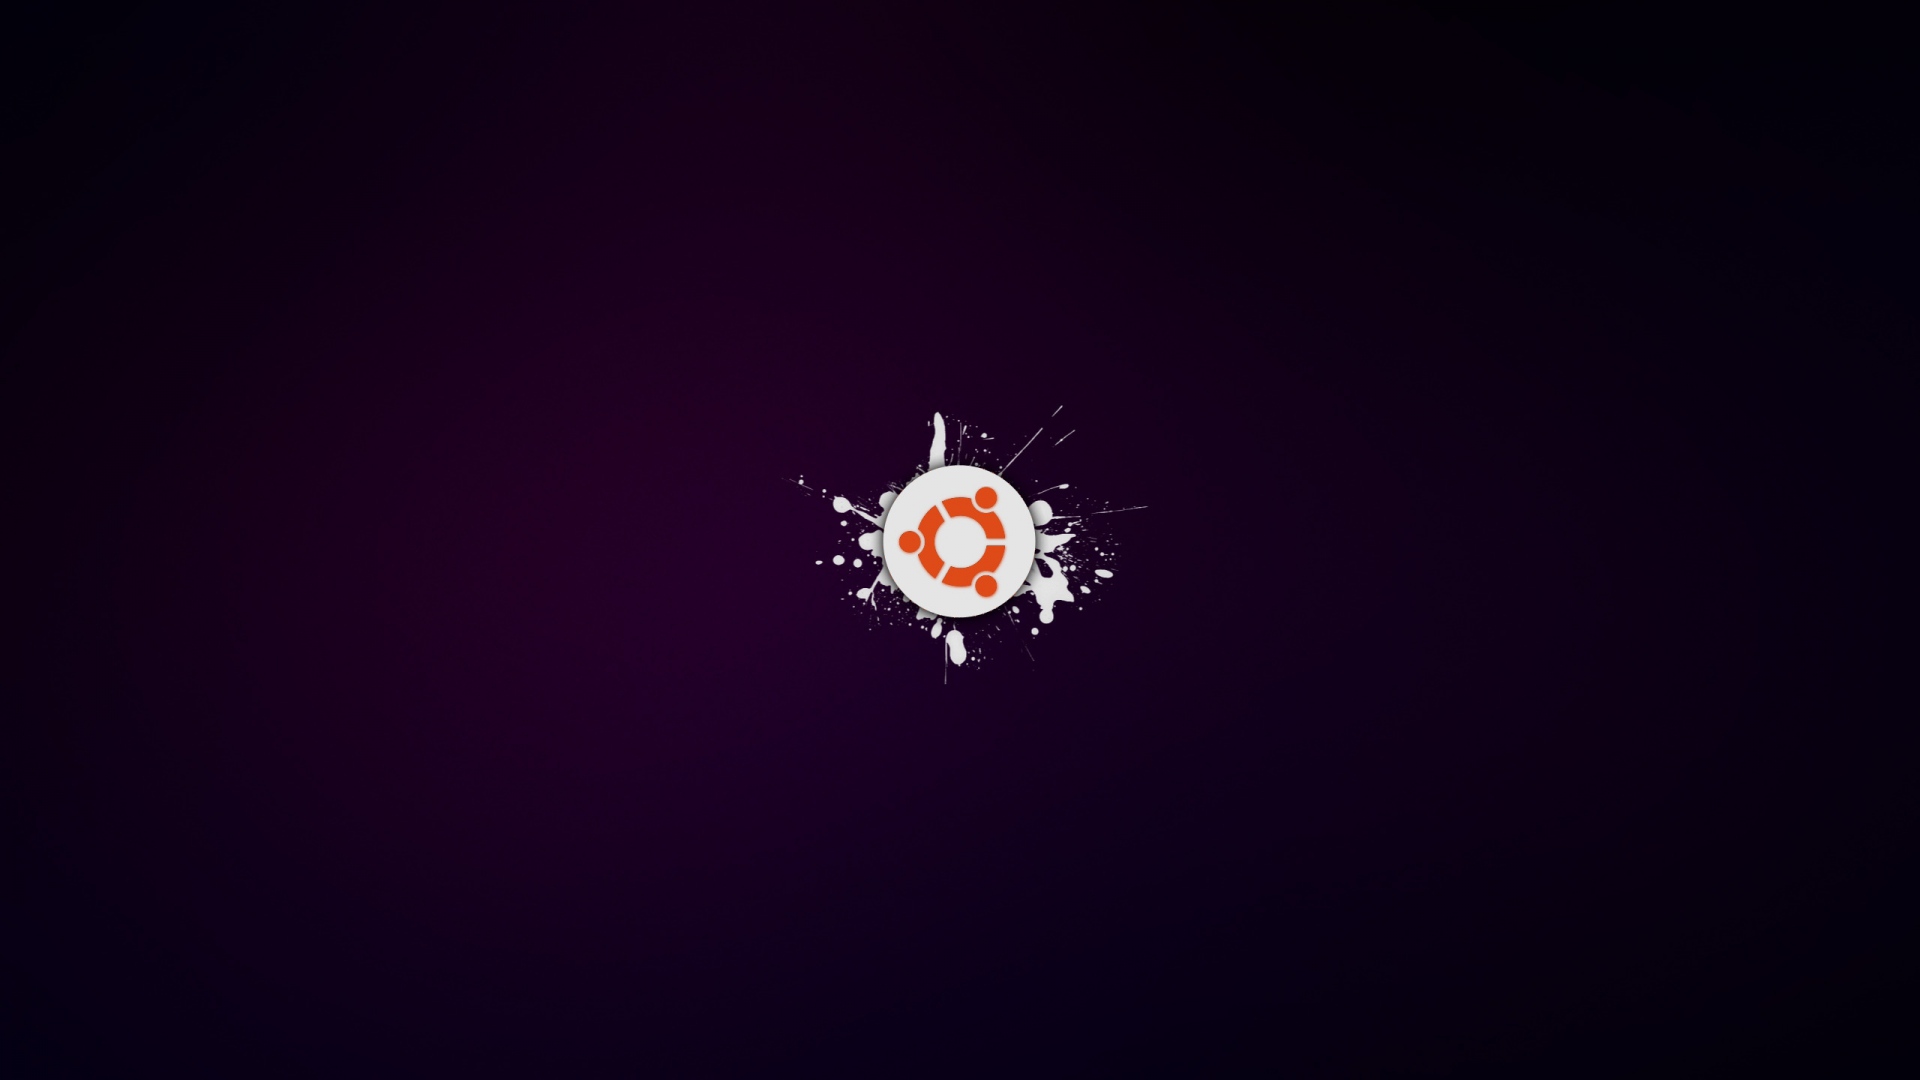 Wallpaper Ubuntu Linux Logo Spray - Insect - HD Wallpaper 